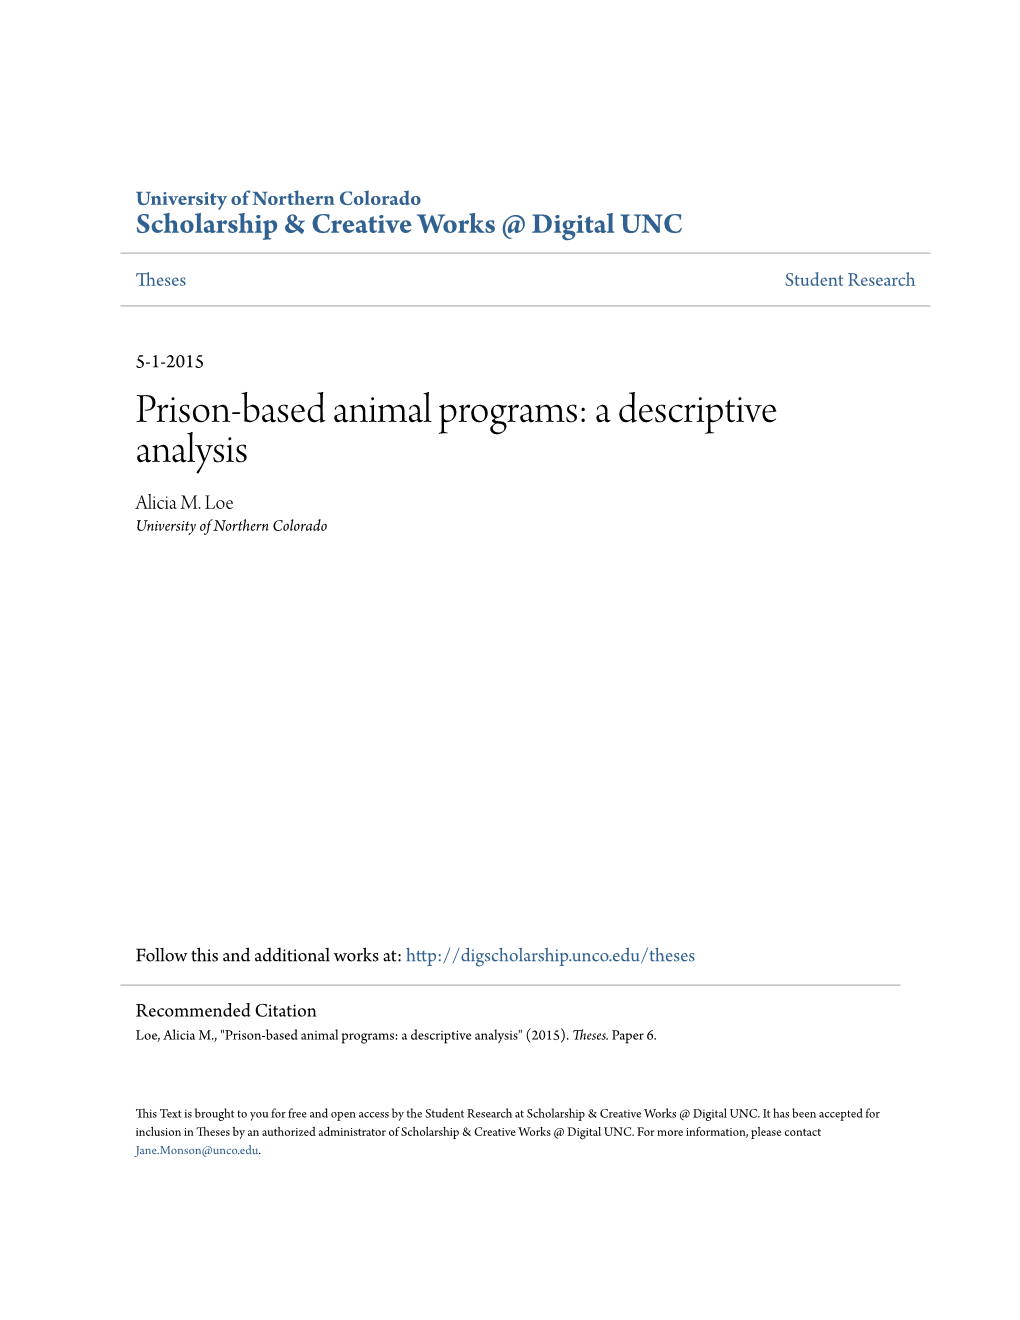 Prison-Based Animal Programs: a Descriptive Analysis Alicia M